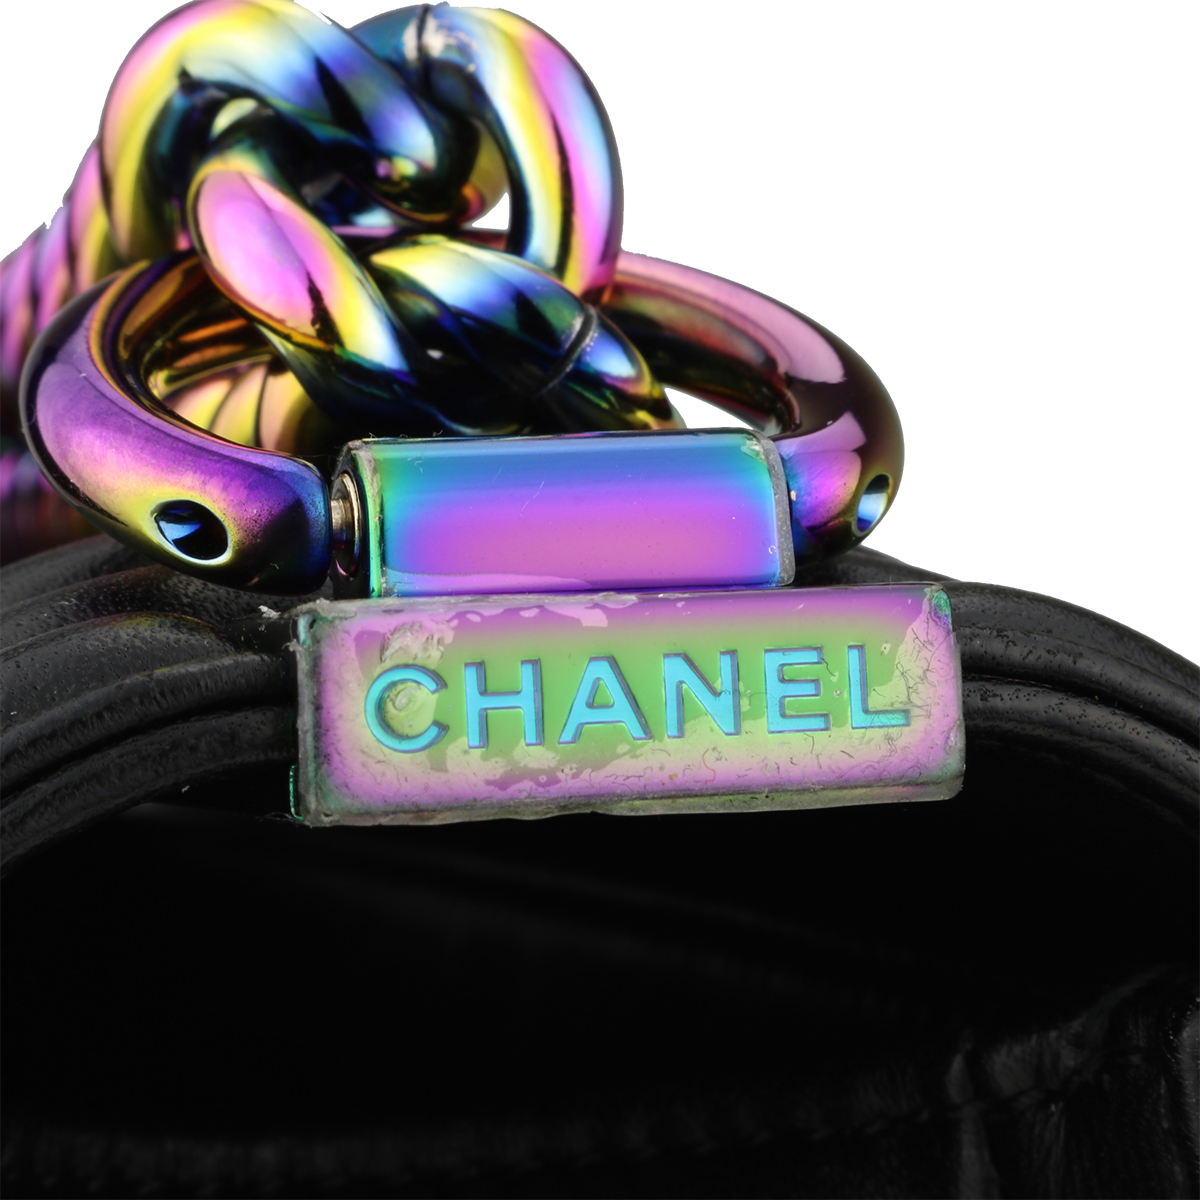 Chanel Boy Bags - 226 For Sale on 1stDibs  chanel boy bag sale, chanel boy  bag for sale, chanel boy bag large